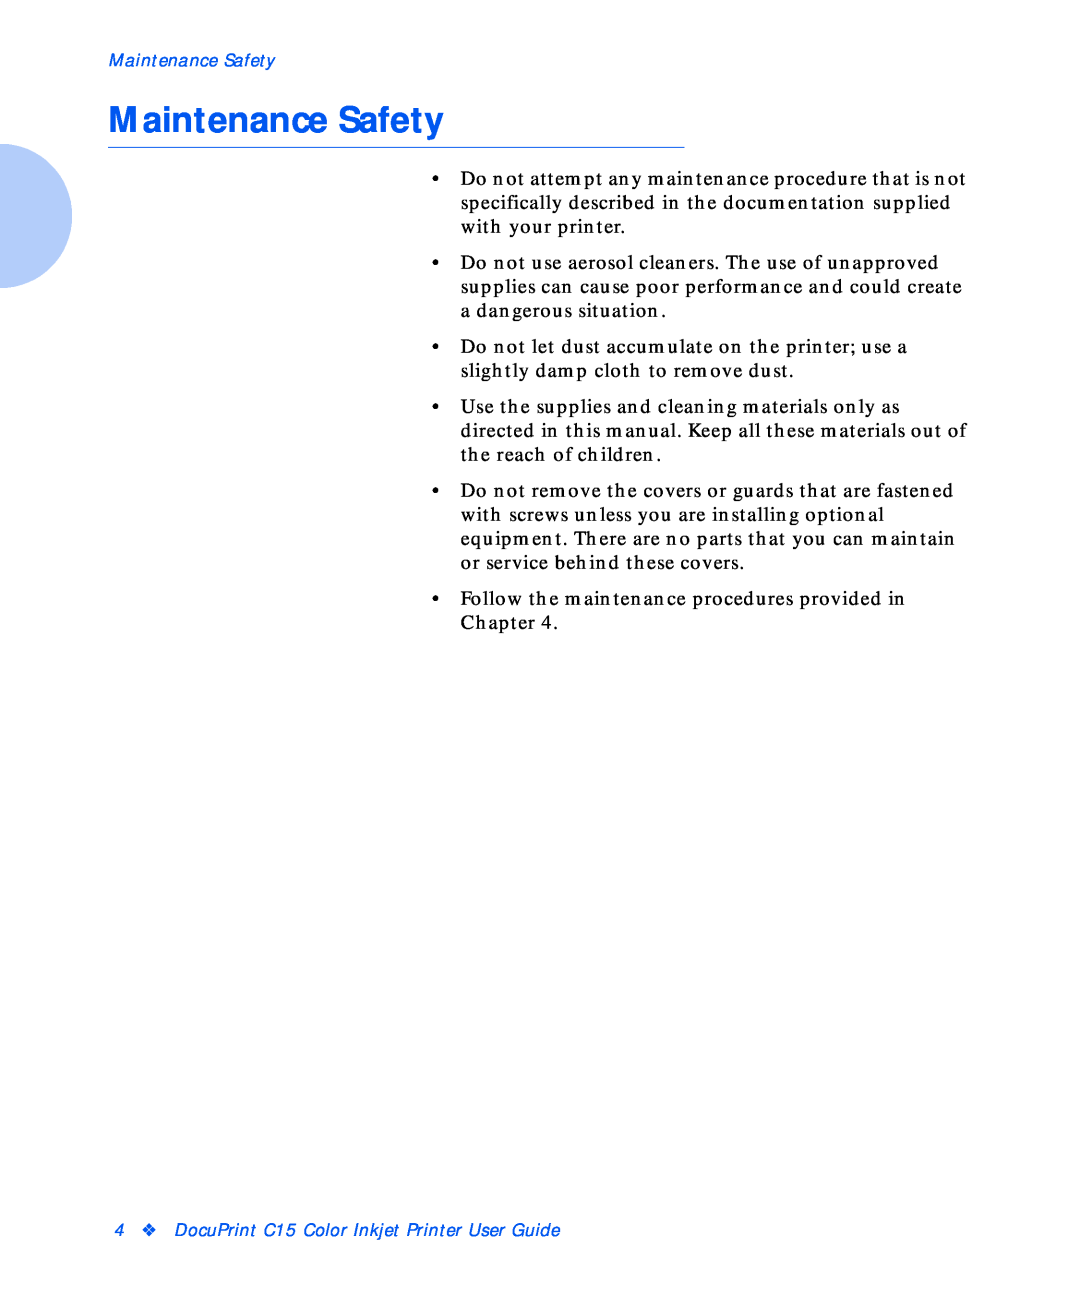 Xerox manual Maintenance Safety, DocuPrint C15 Color Inkjet Printer User Guide 